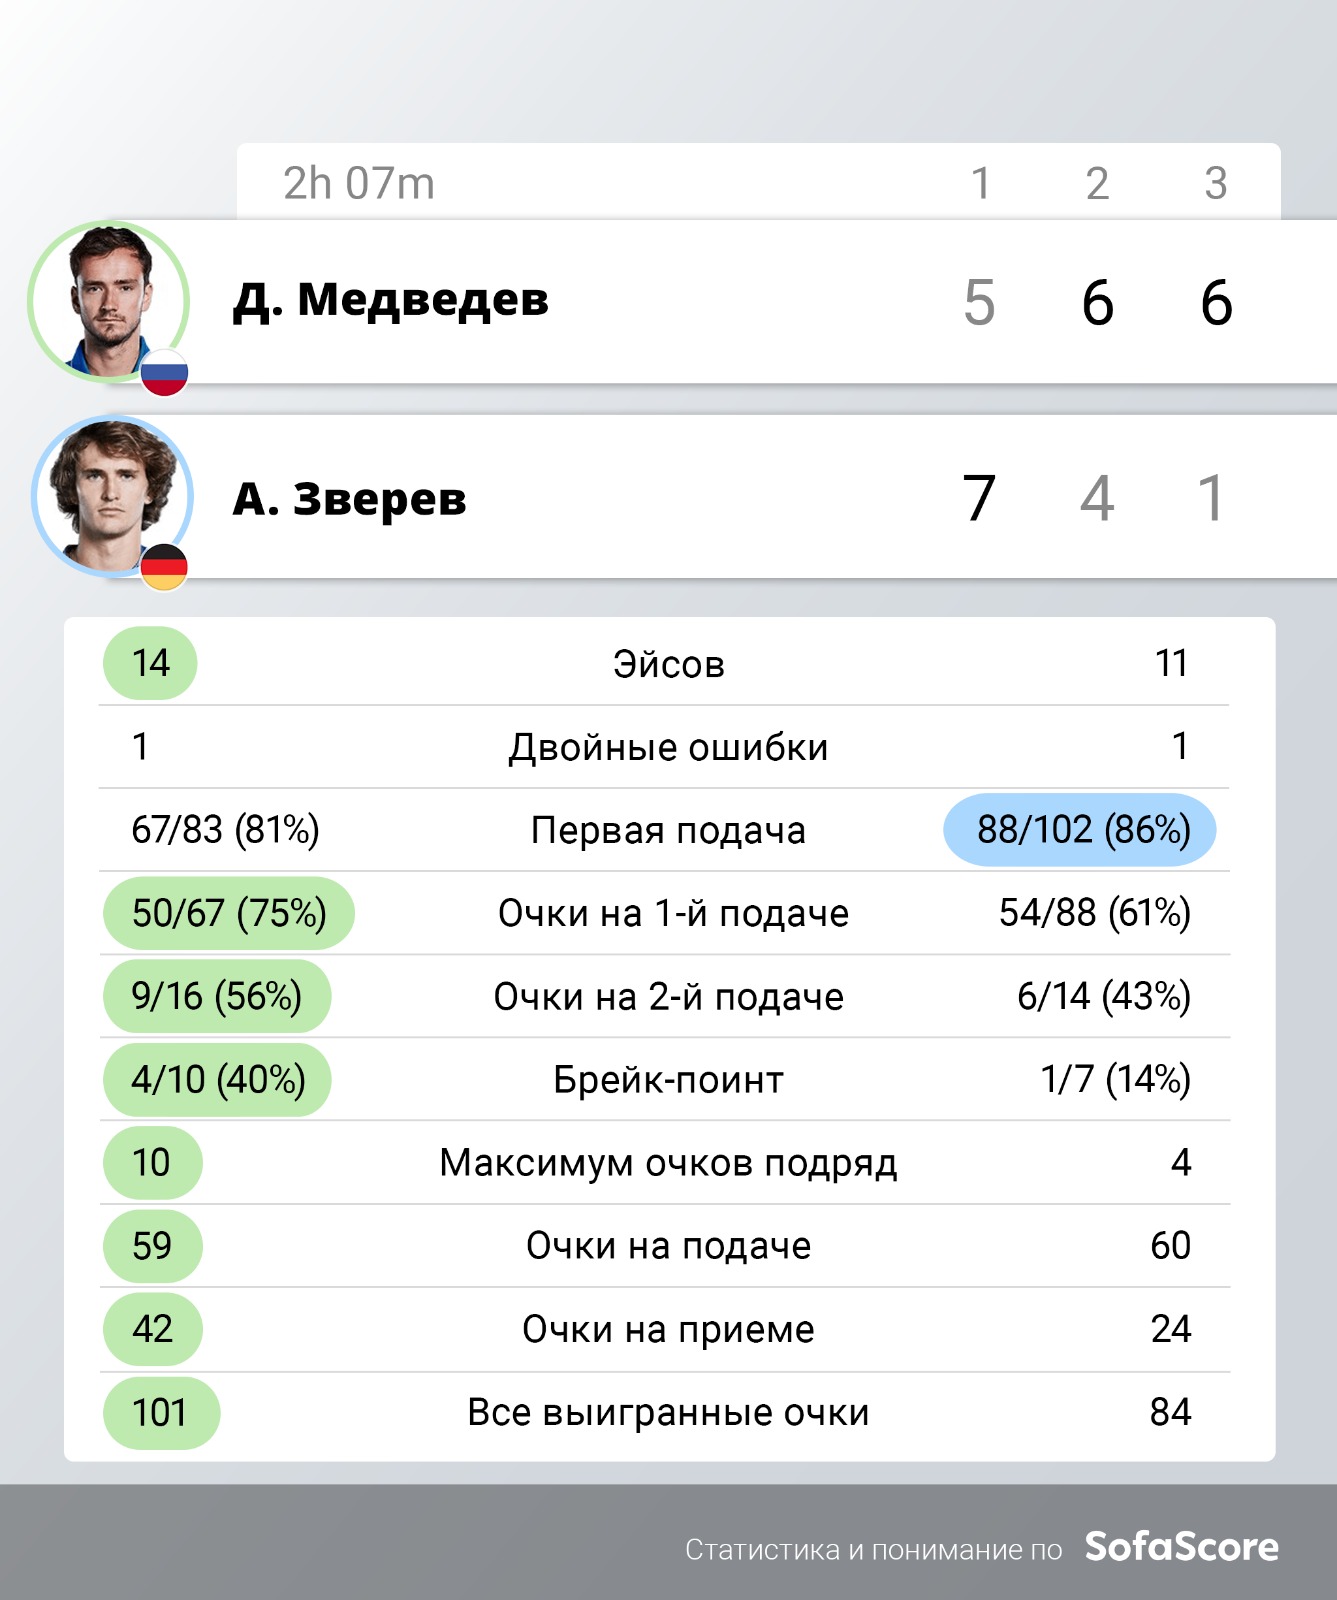 Теннисист Медведев выиграл турнир серии «Мастерс» в Париже